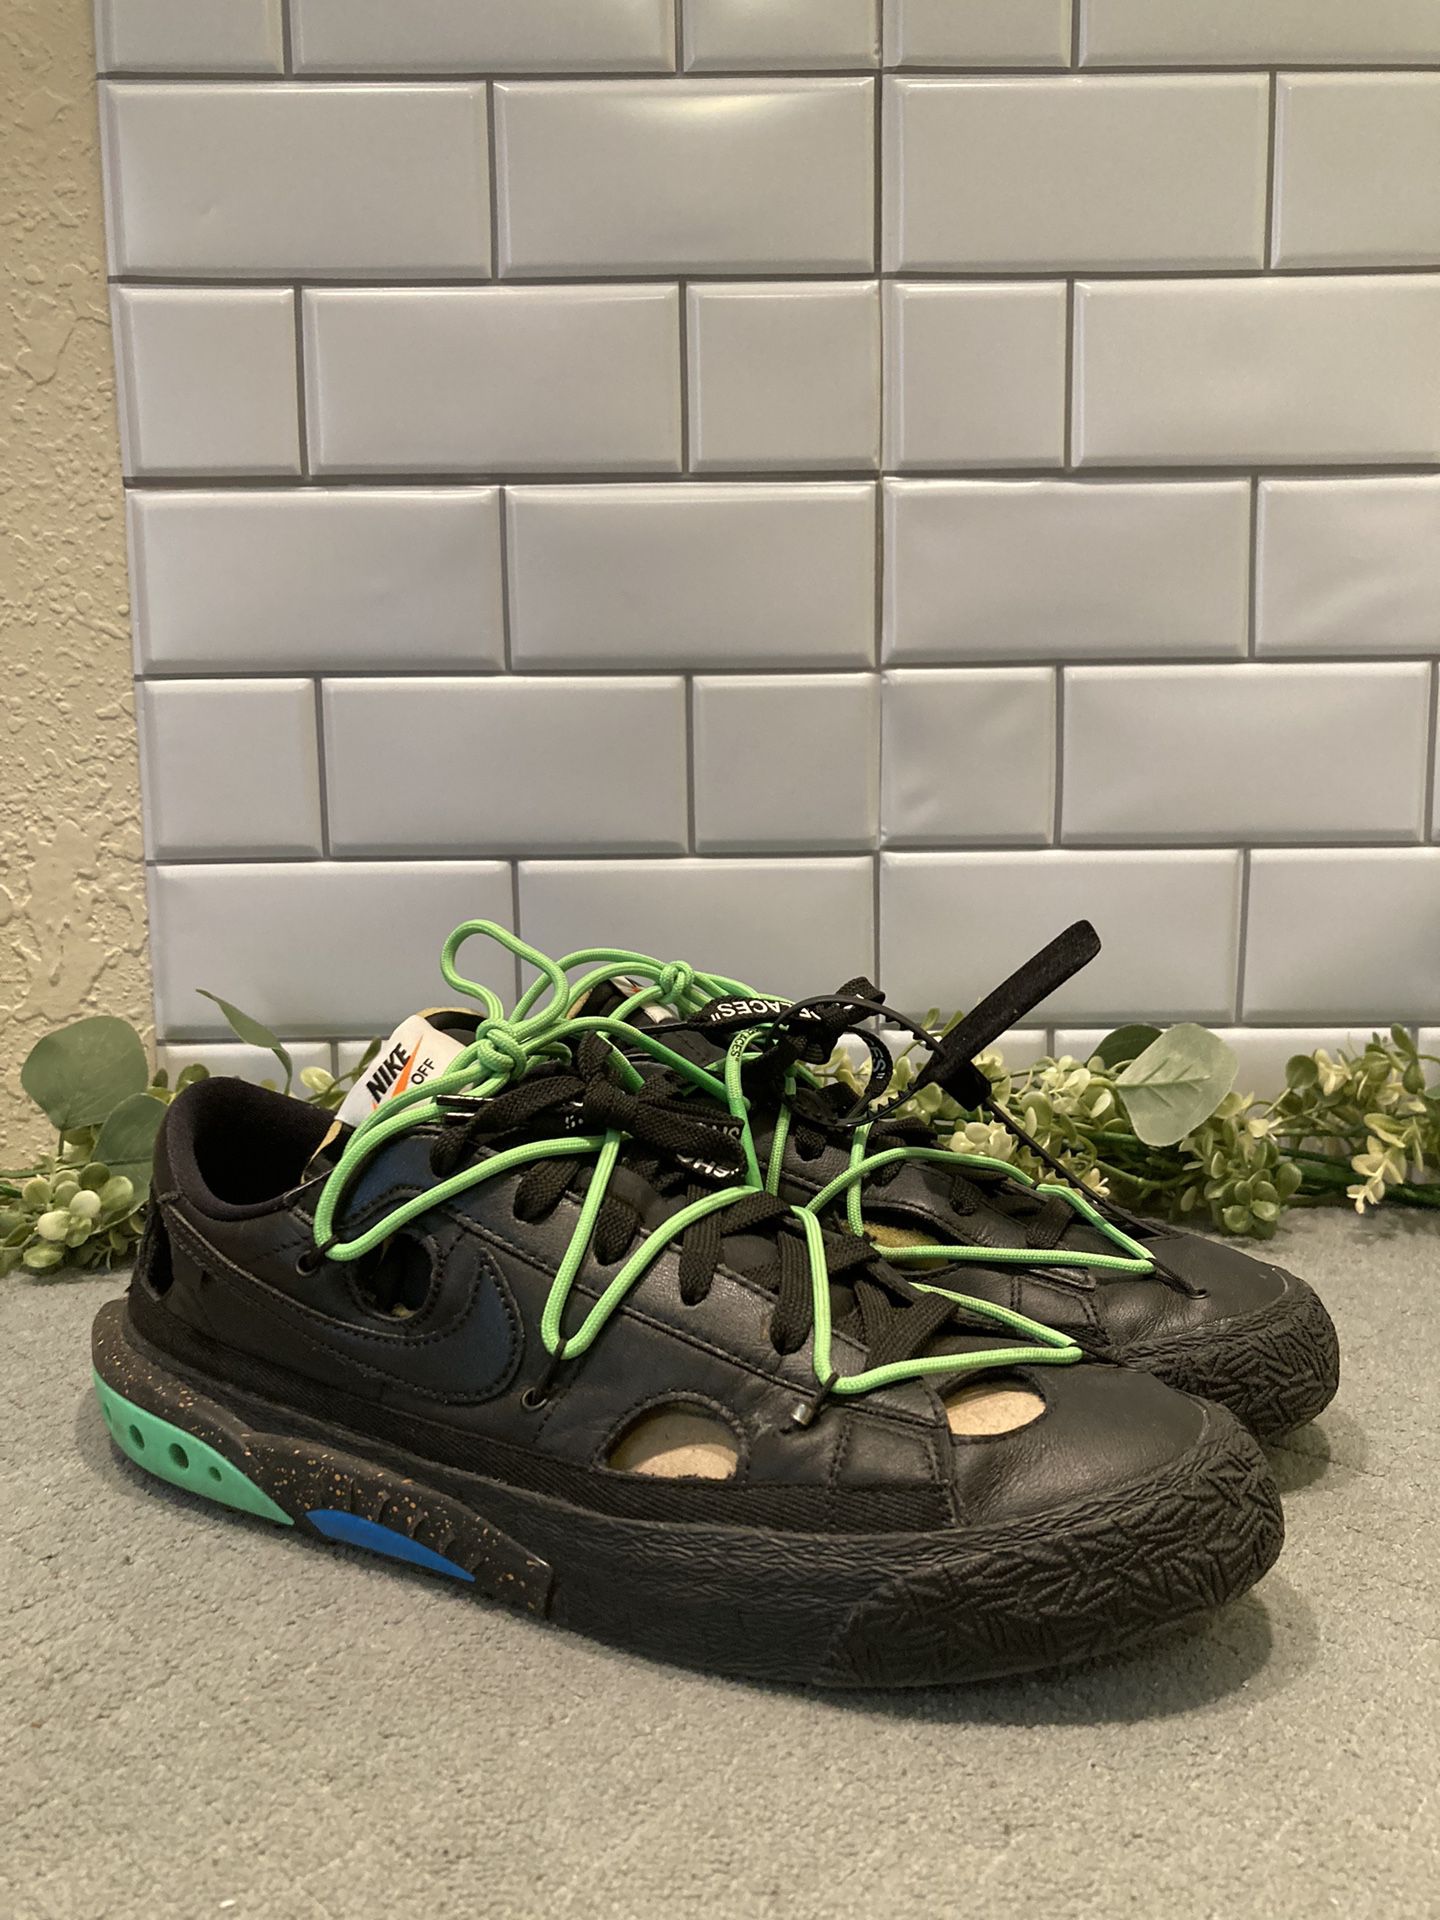 Nike Off-White Blazer Low "Black Electro Green" Sneakers Size 12 Men's